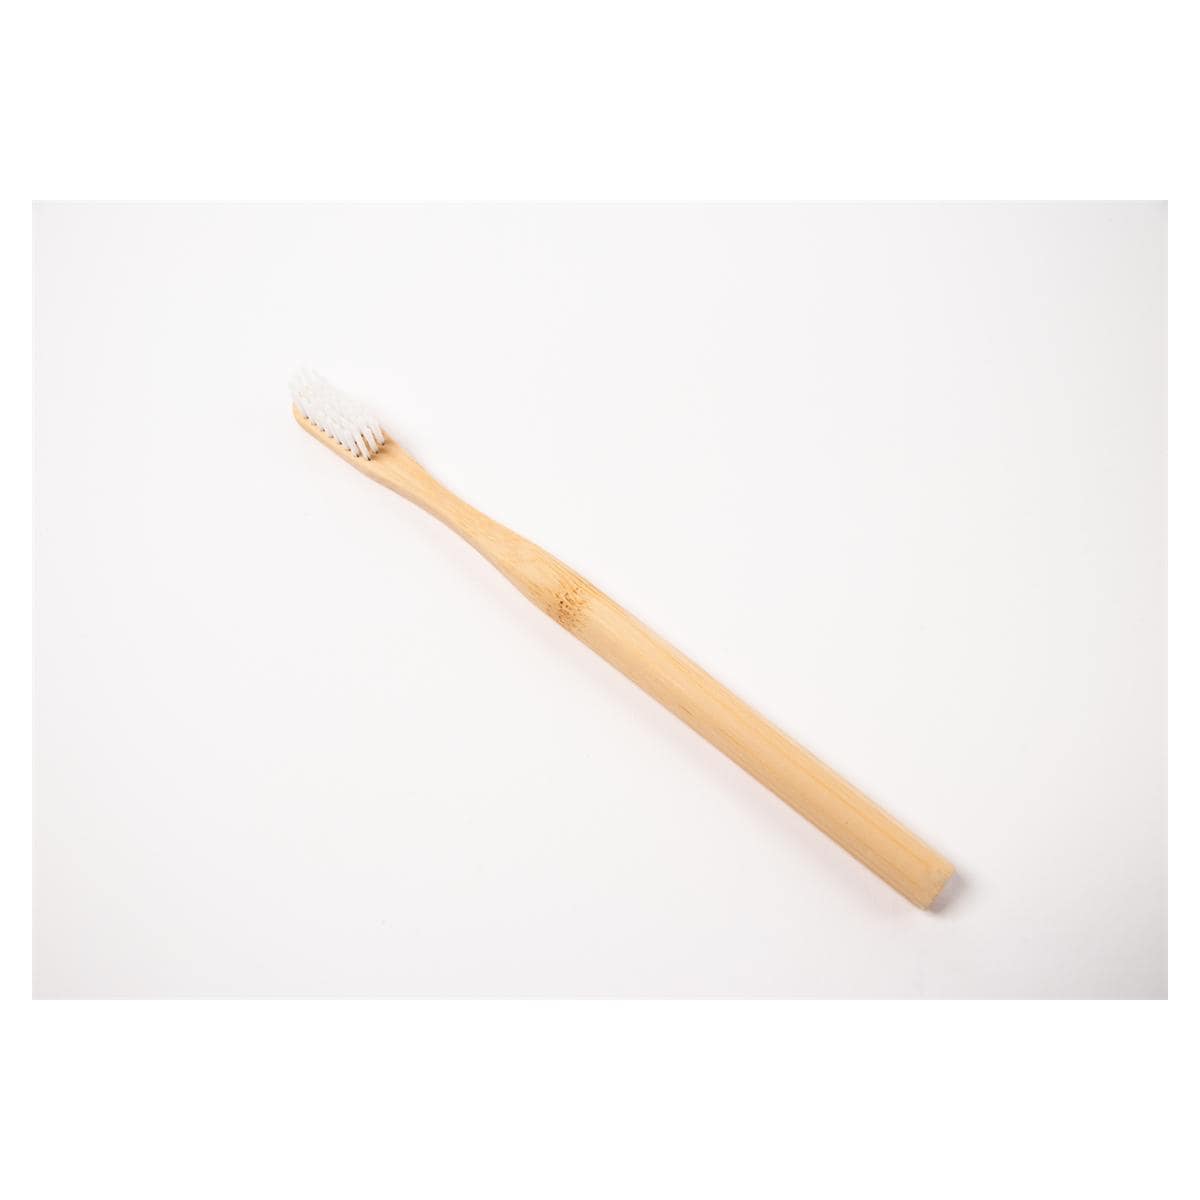 Acclean Bamboo tandenborstel - Per stuk